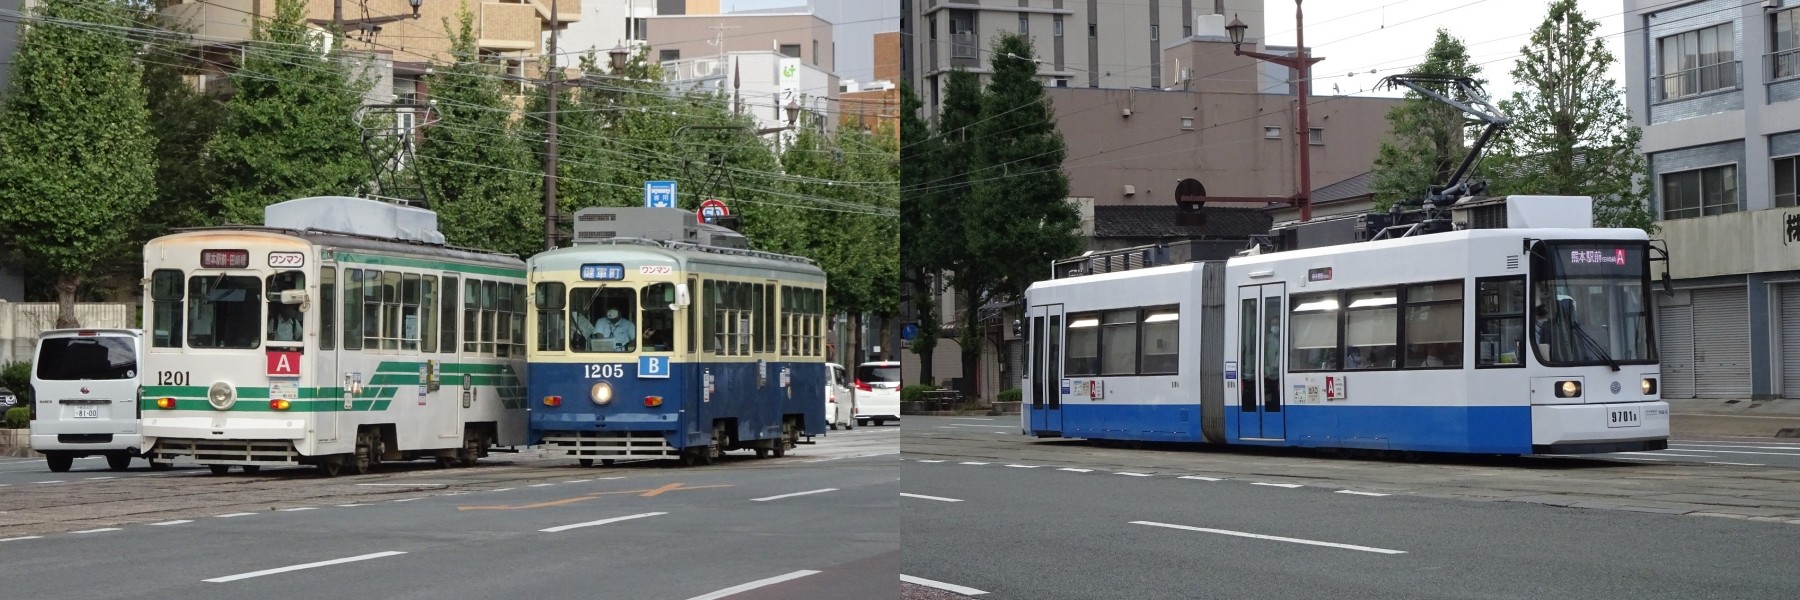 Tram Kumamoto yang beroperasi di dalam kota Kumamoto, Kyushu